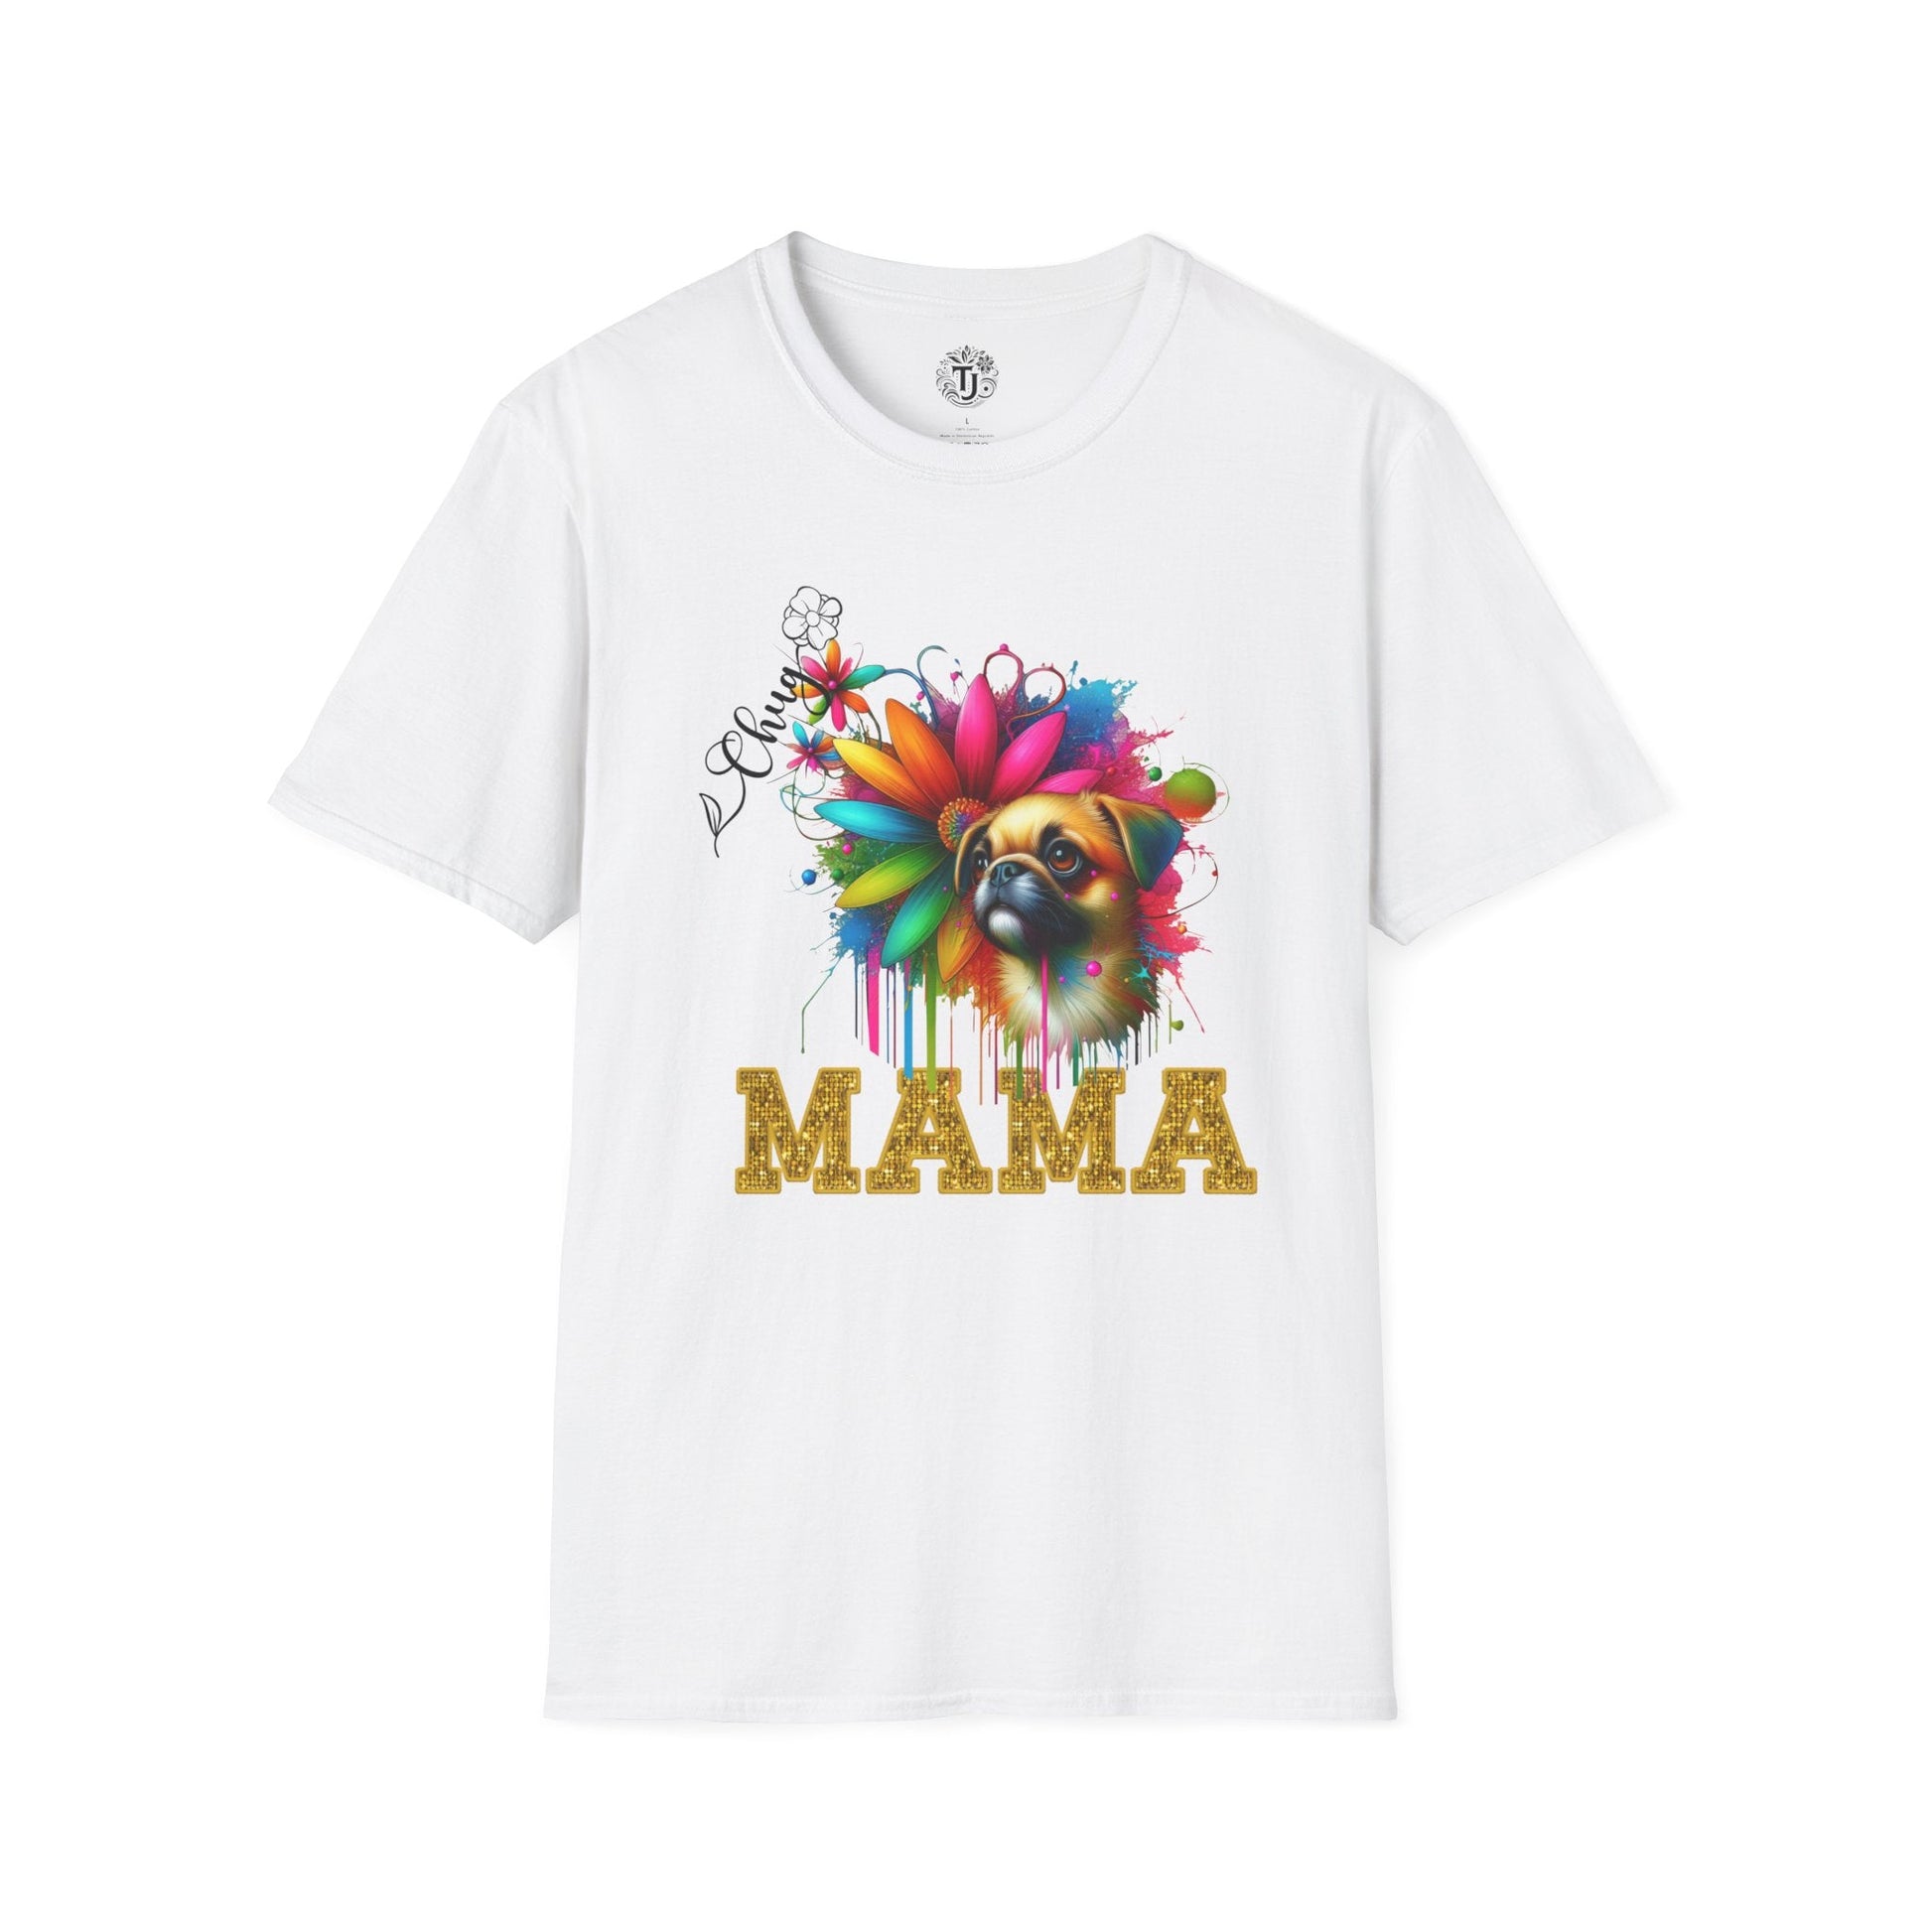 dog-mom-t-shirt-women's-clothing-t-shirt-printing-graphic-t-2